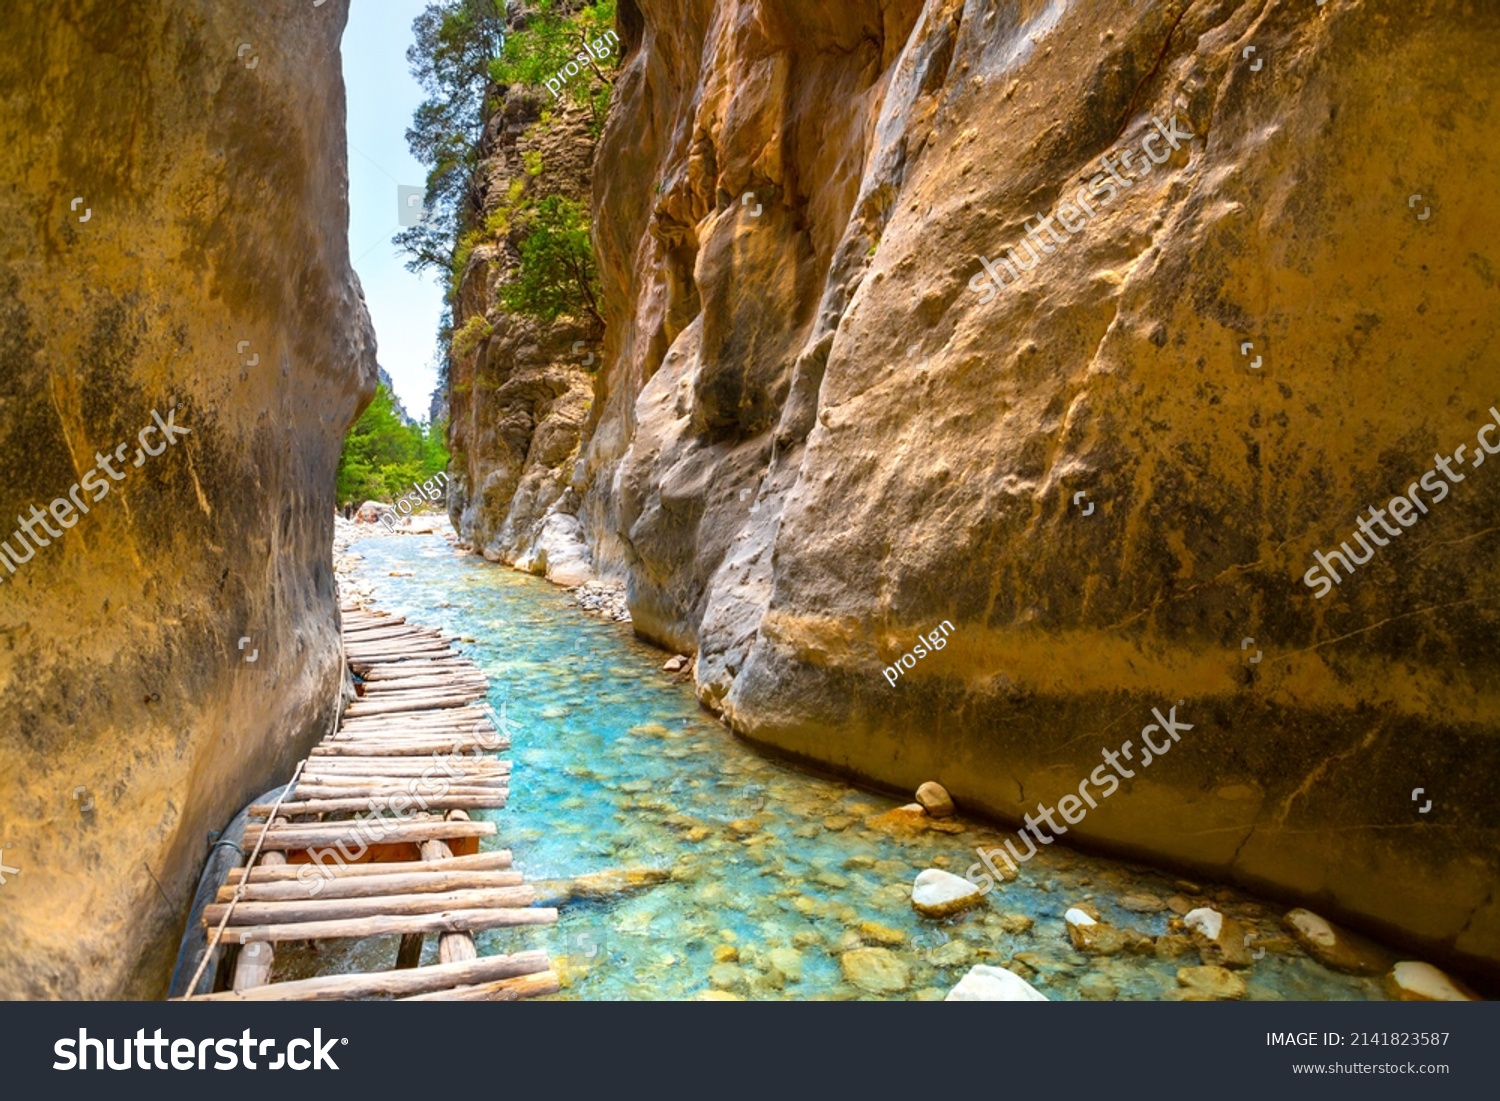 National Park Samaria Gorge, hiking trail. Crete, Greece #2141823587